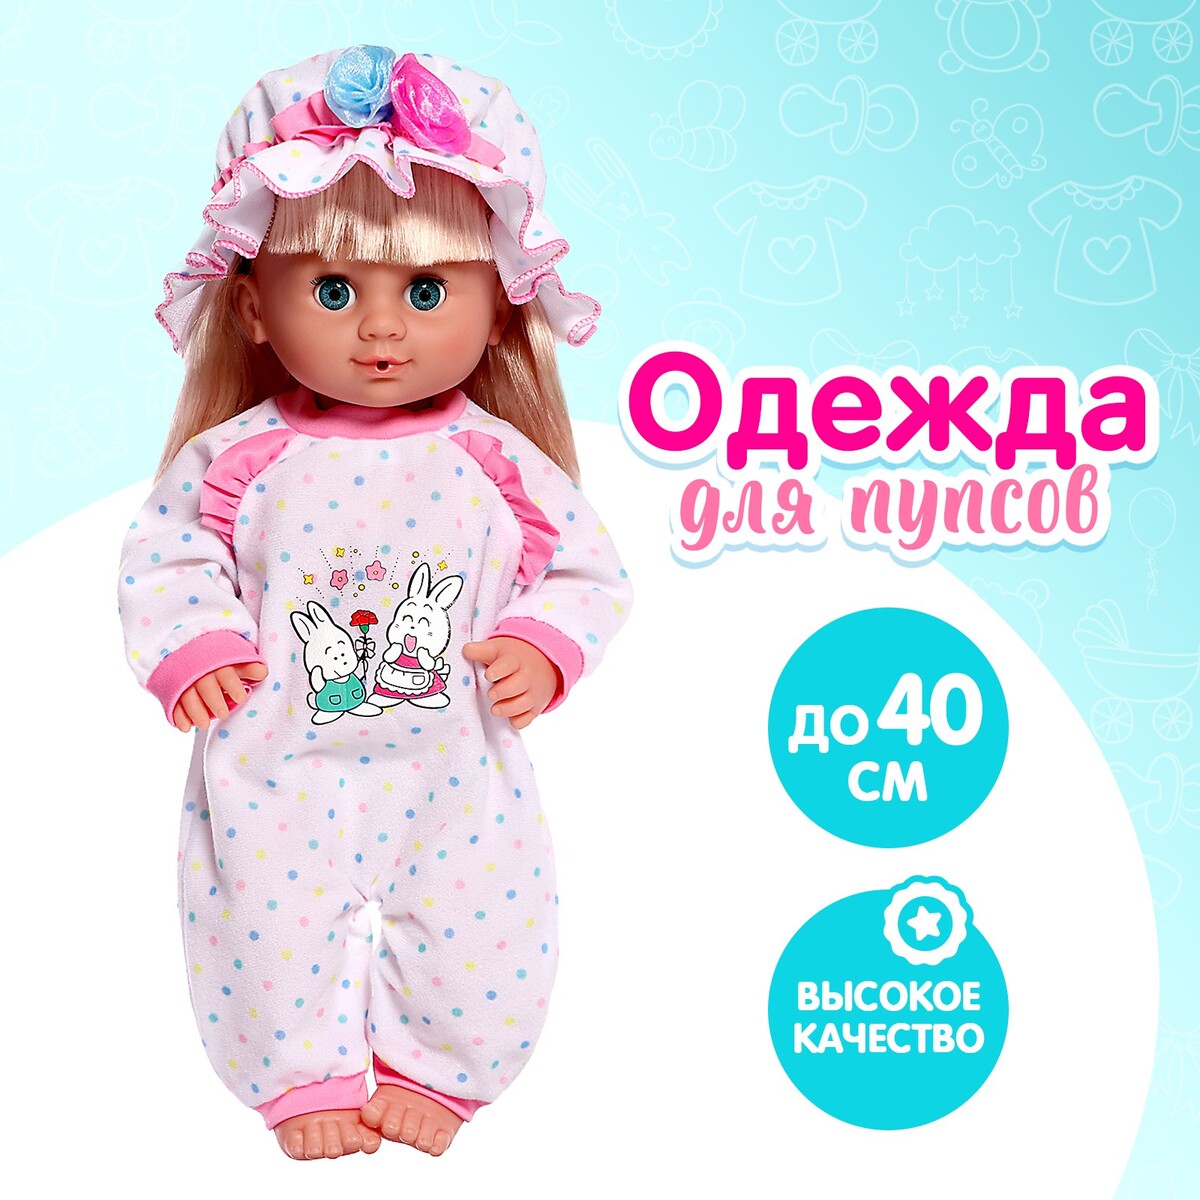 Пижама для кукол 38-40 см, 2 вещи, текстиль, на липучках чувства и вещи